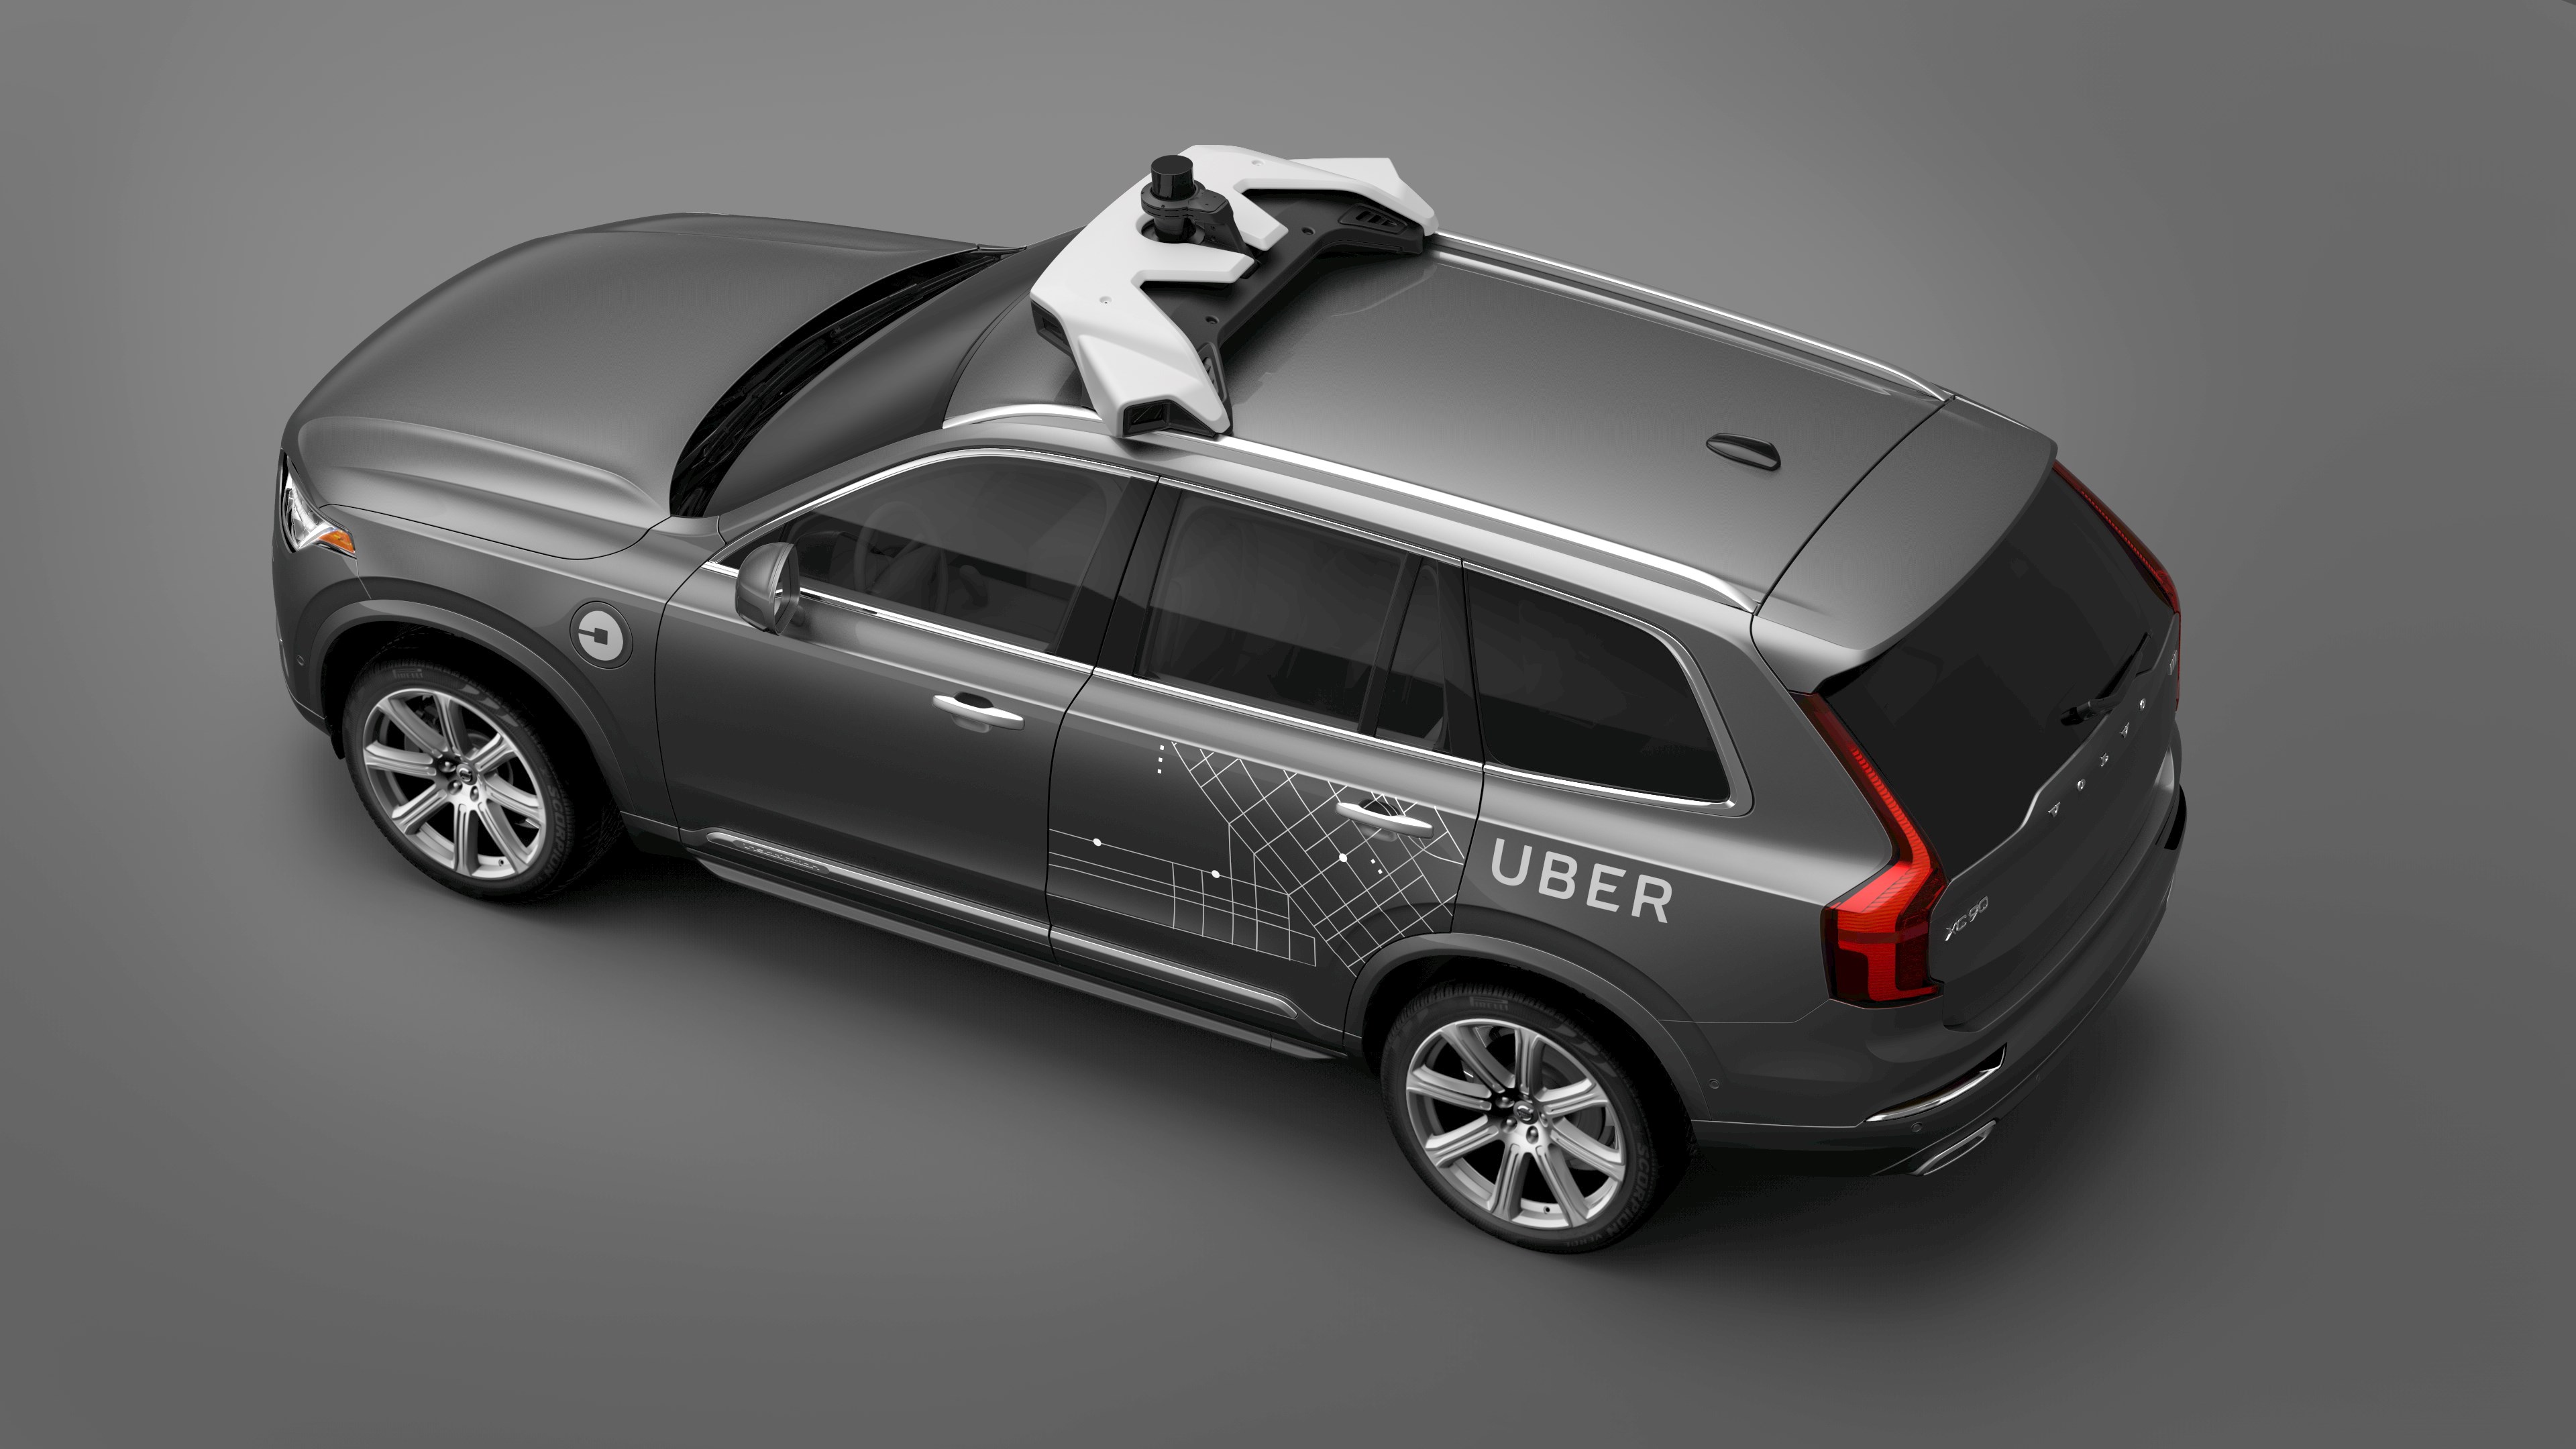 An Uber self-driving car